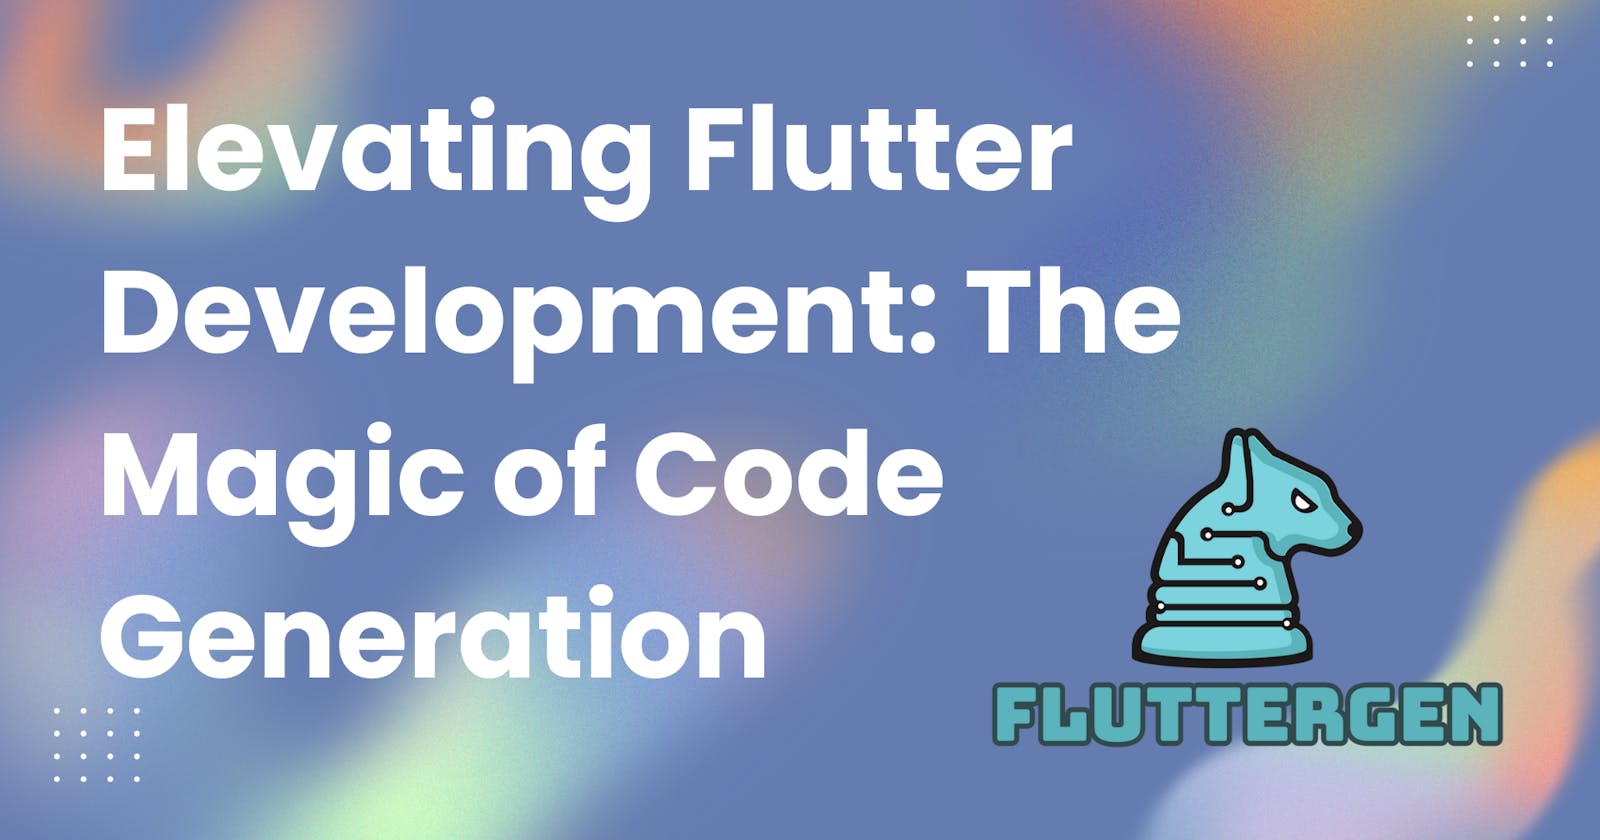 Elevating Flutter Development: The Magic of Code Generation